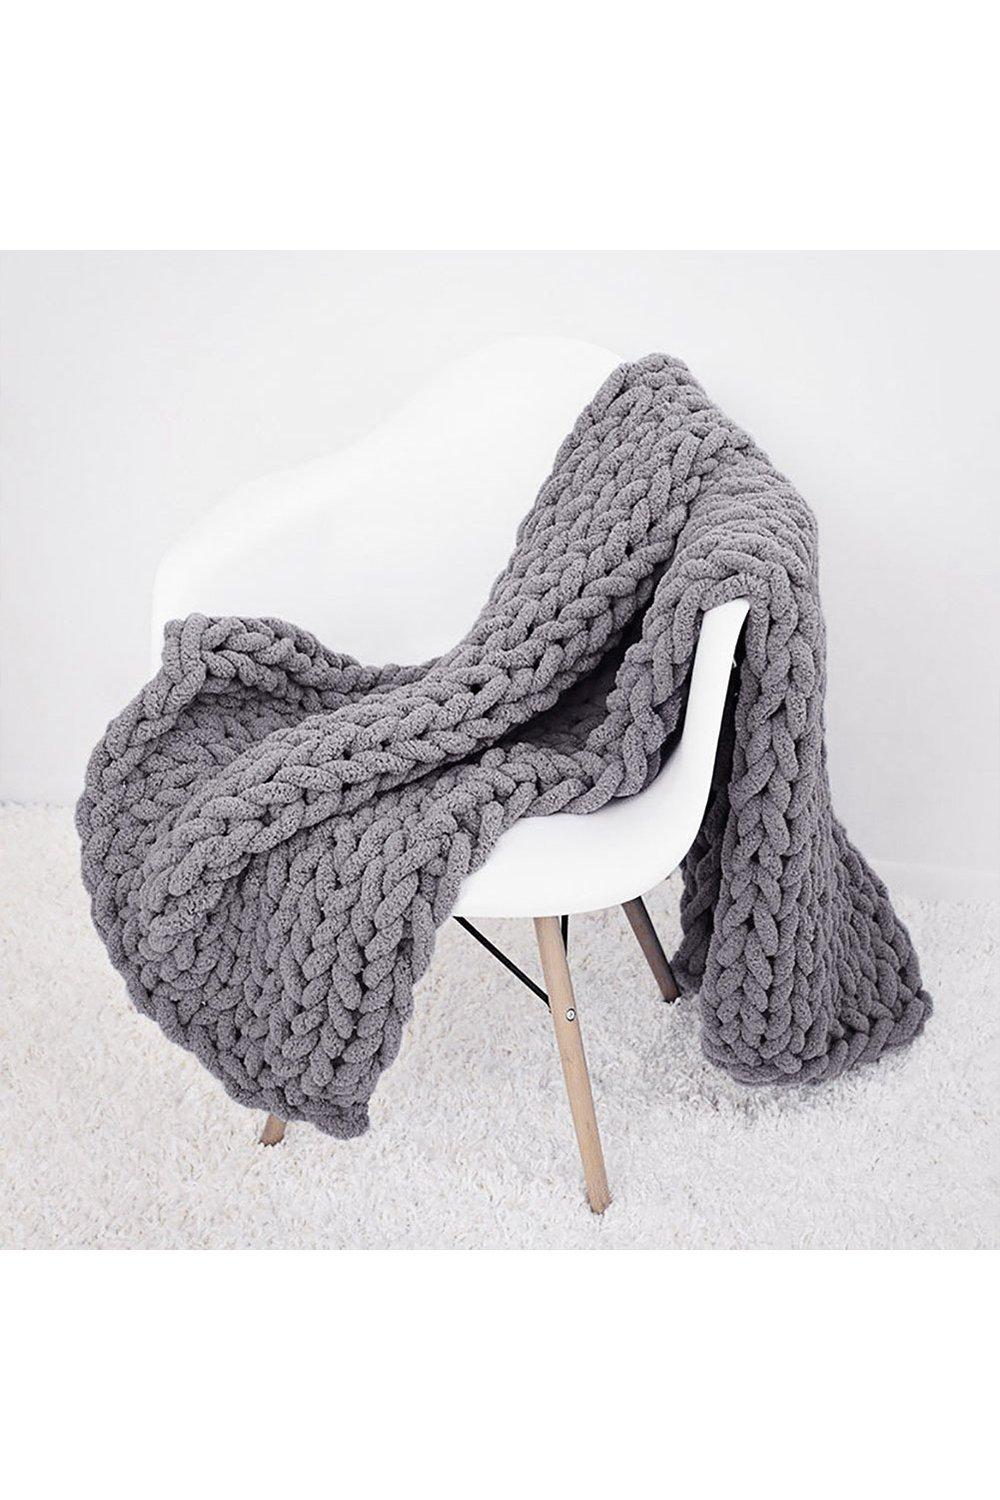 120x180cm Chunky Knit Throw Blanket